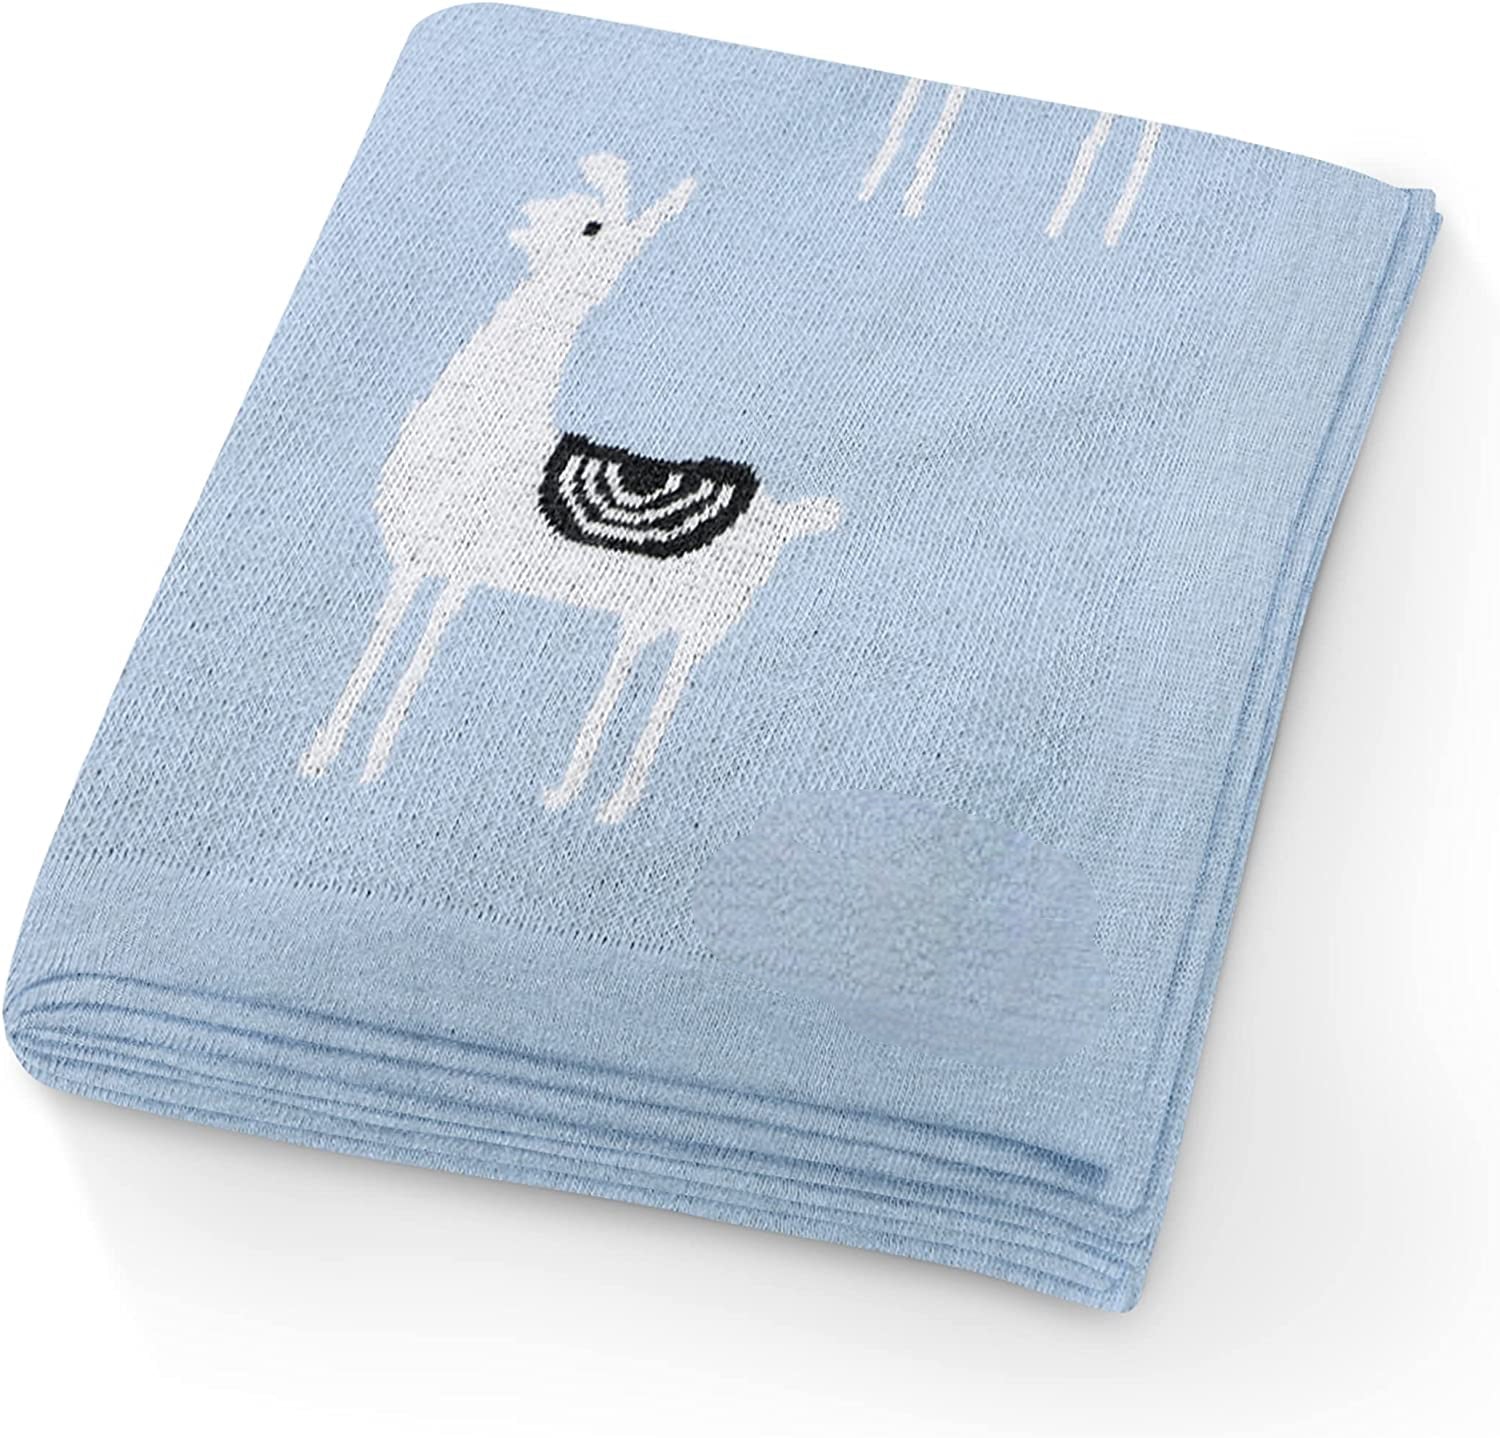 Personalized Blanket - Blue Llama